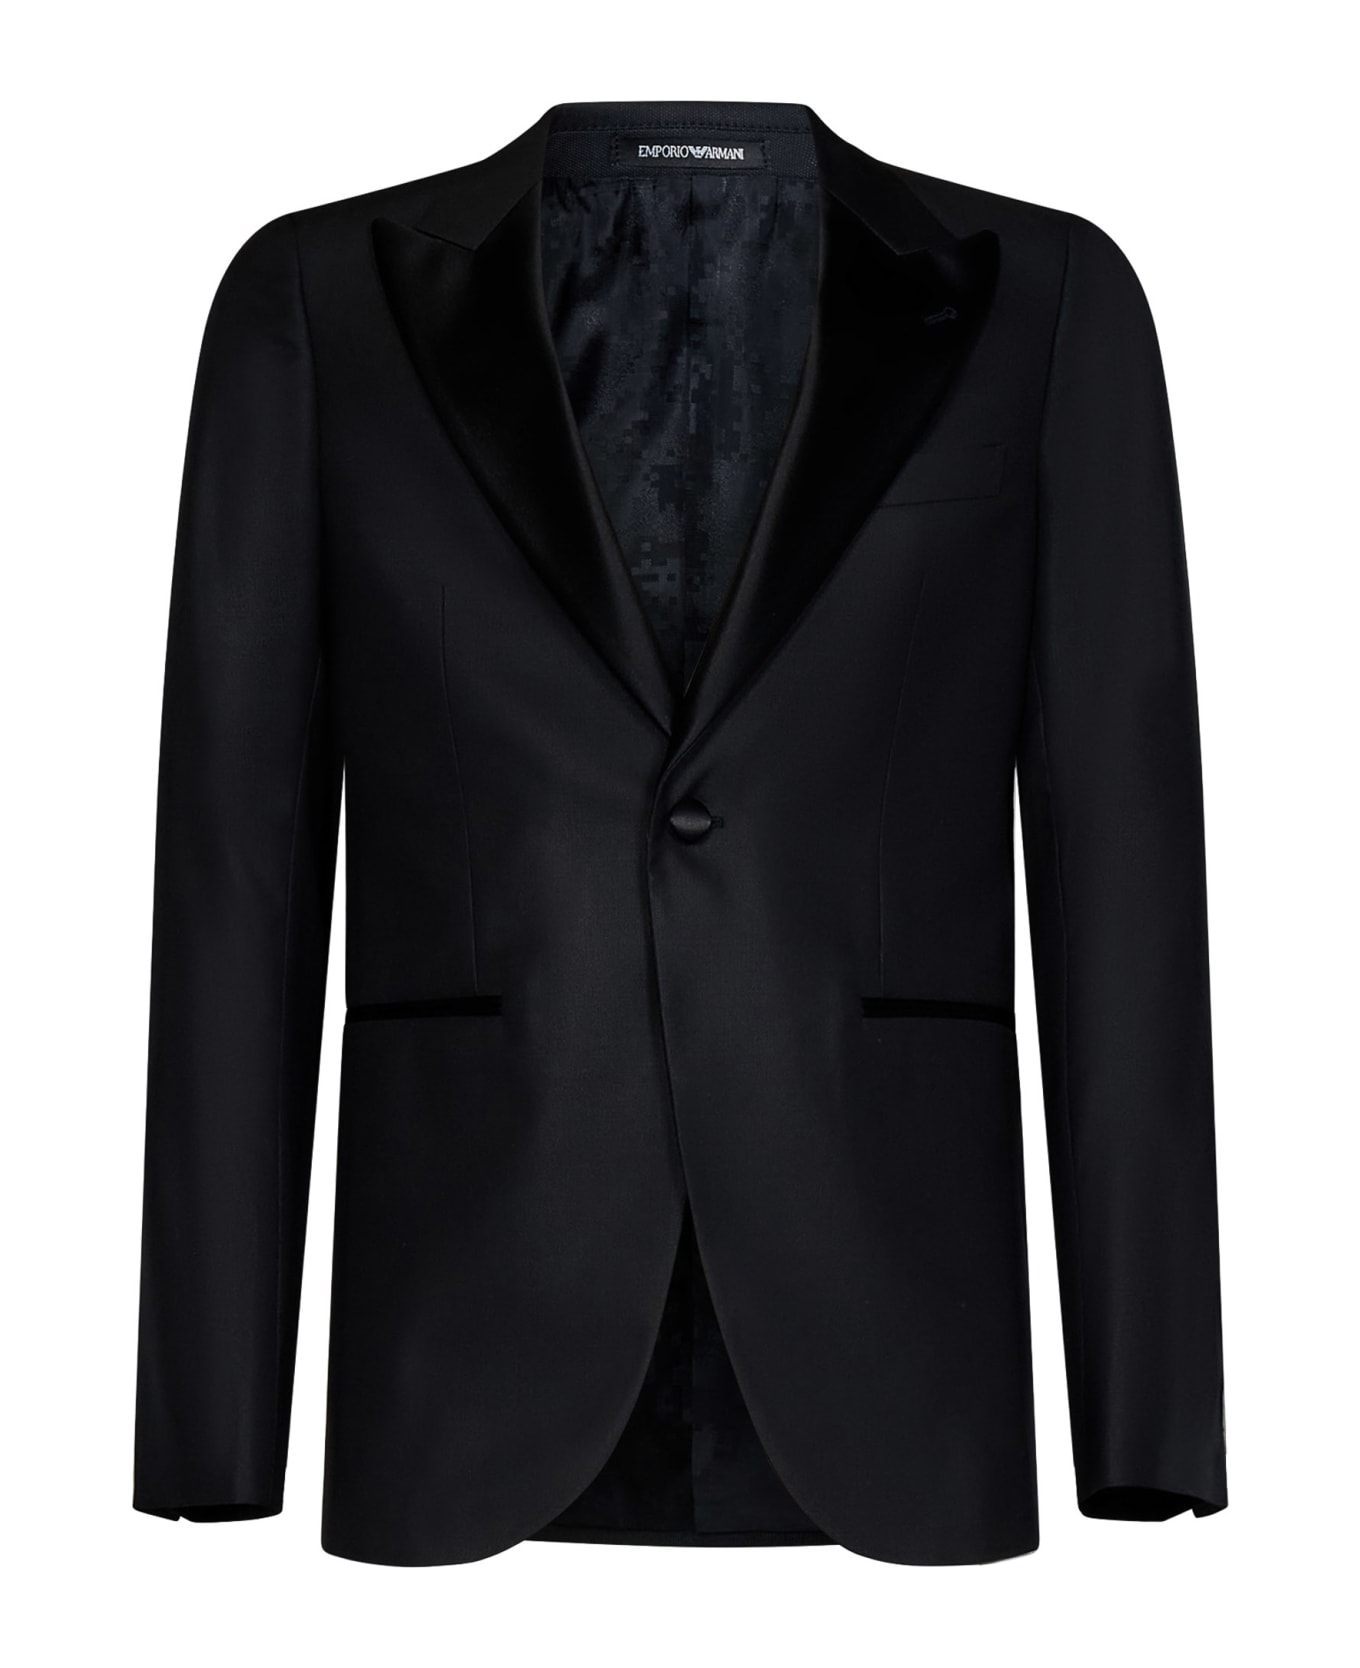 Emporio Armani Suit - Black